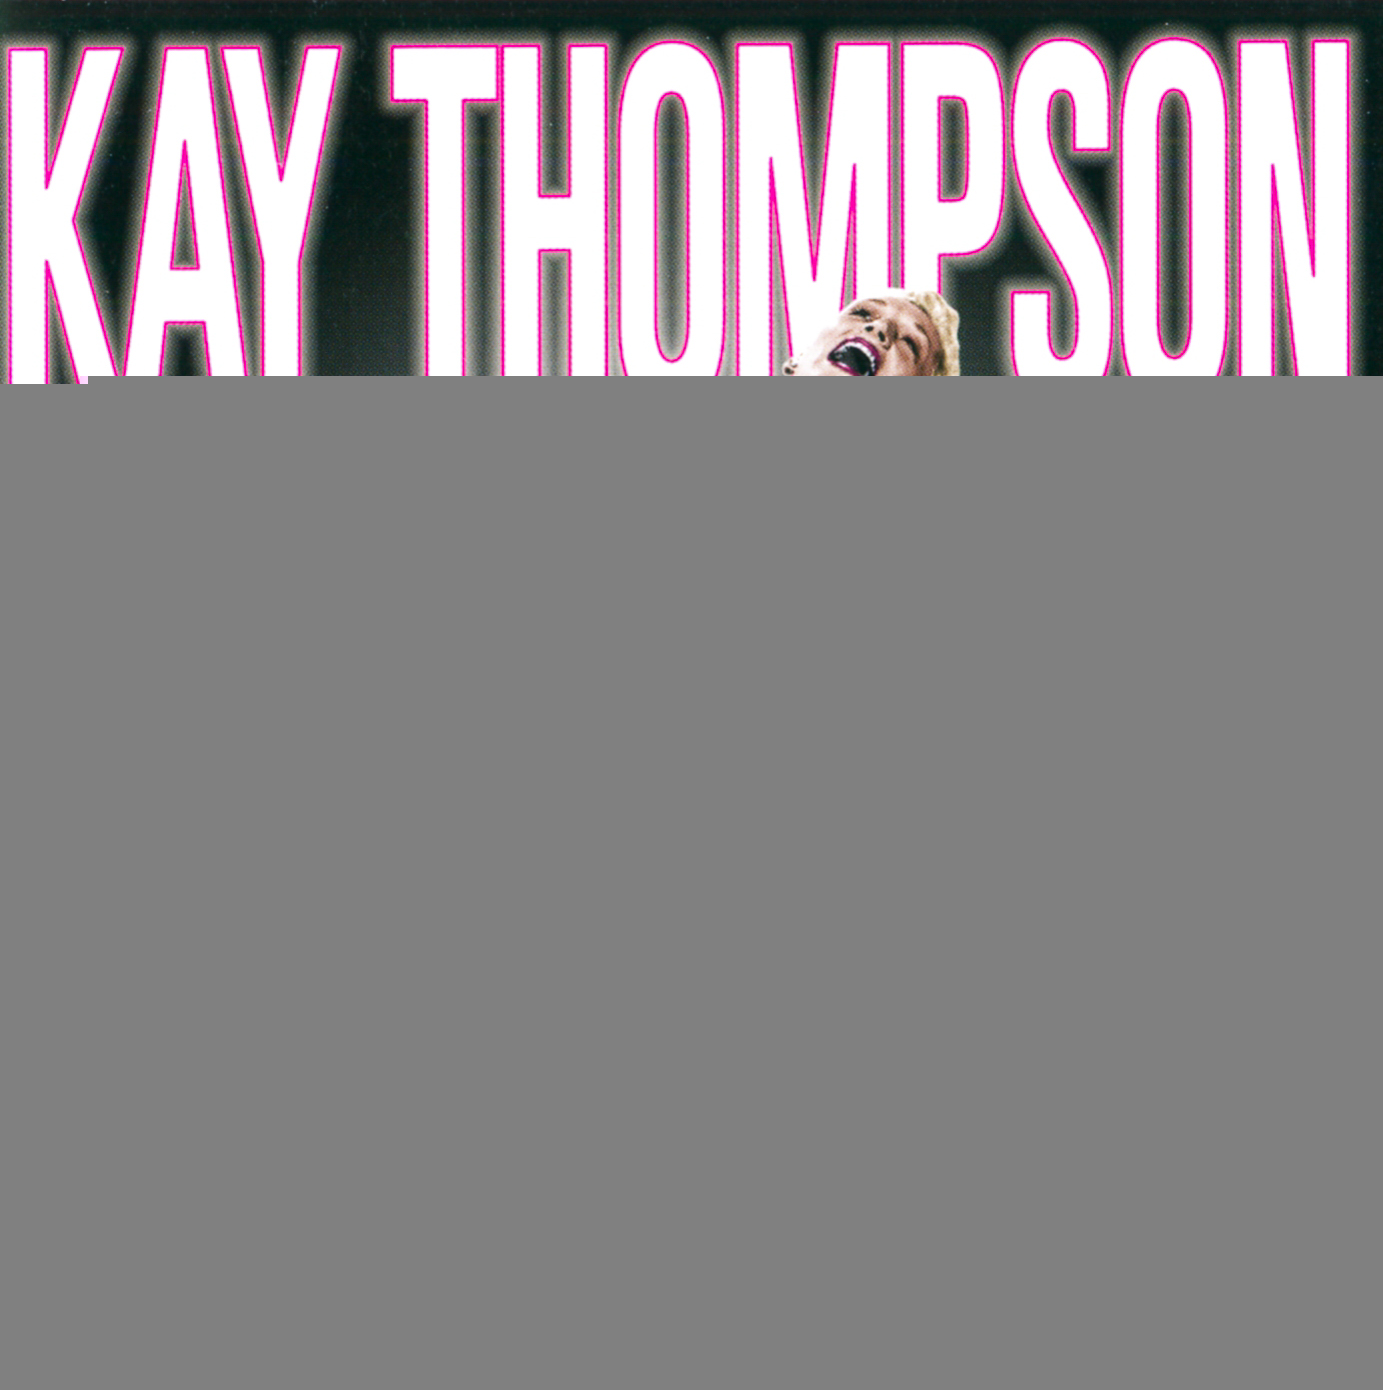 Kay Thompson album picture